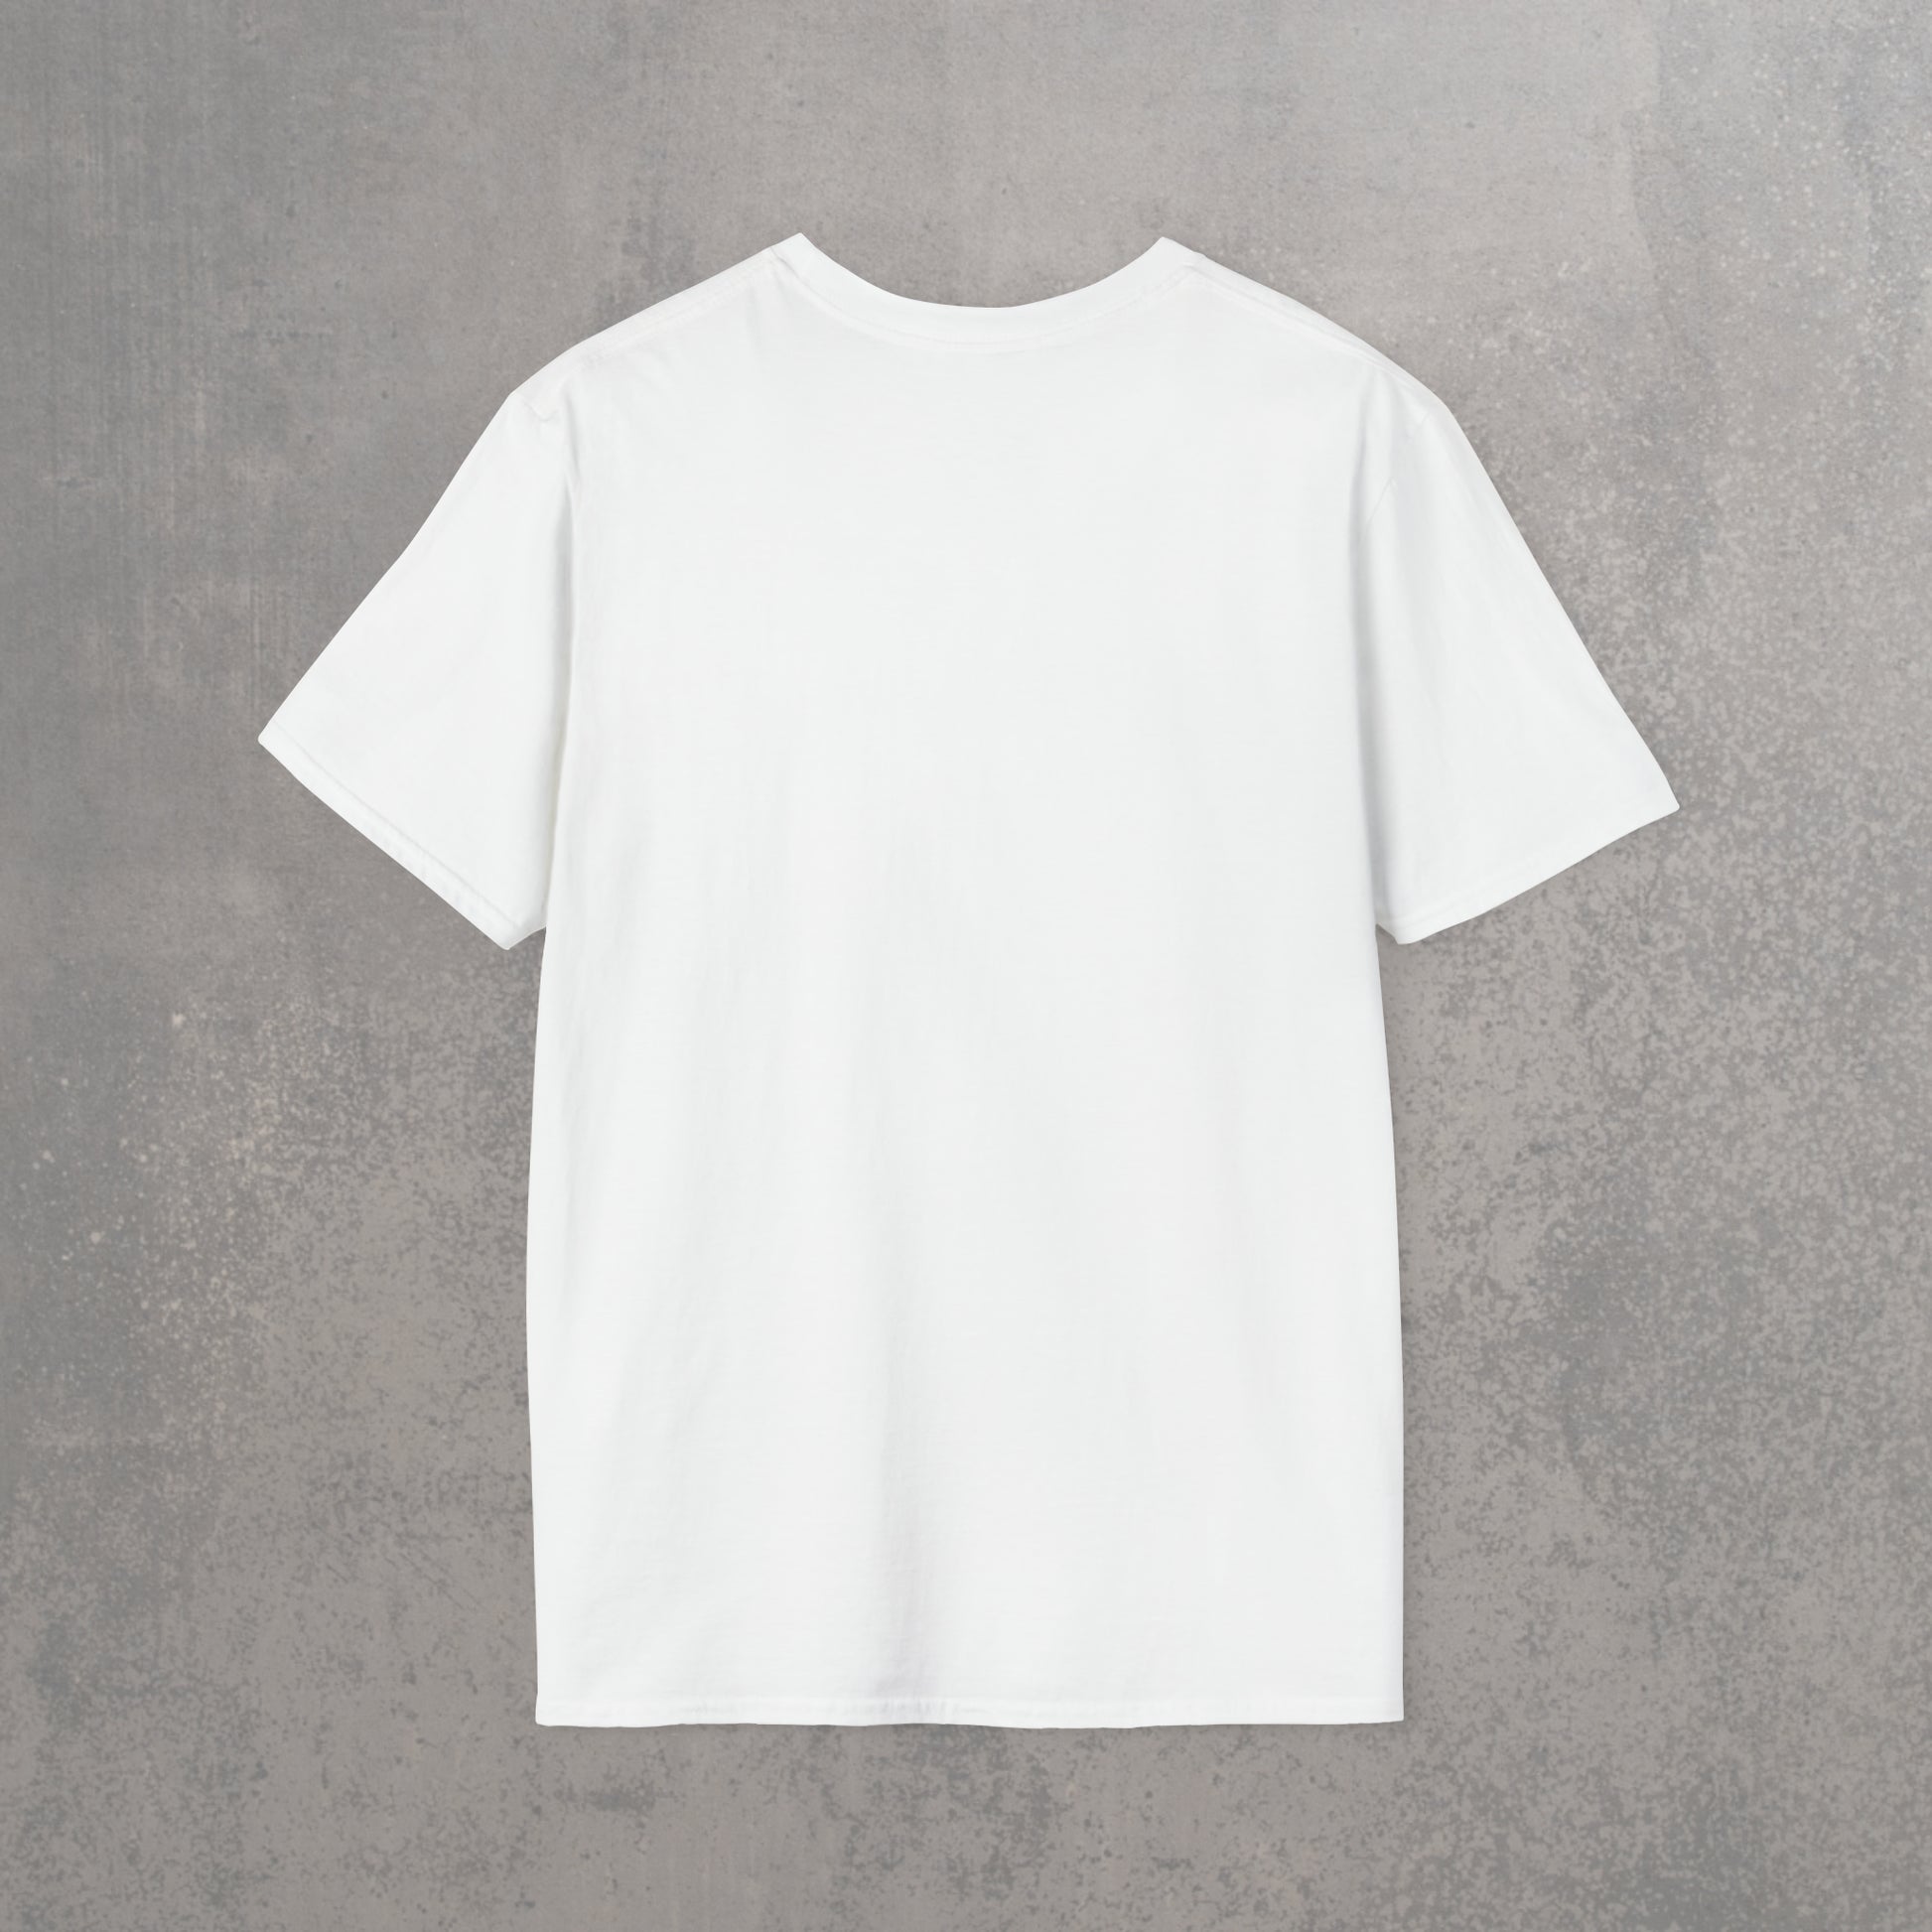 RECONZY White 'Summer Vibes' Pop-Punk T-Shirt - Back View.